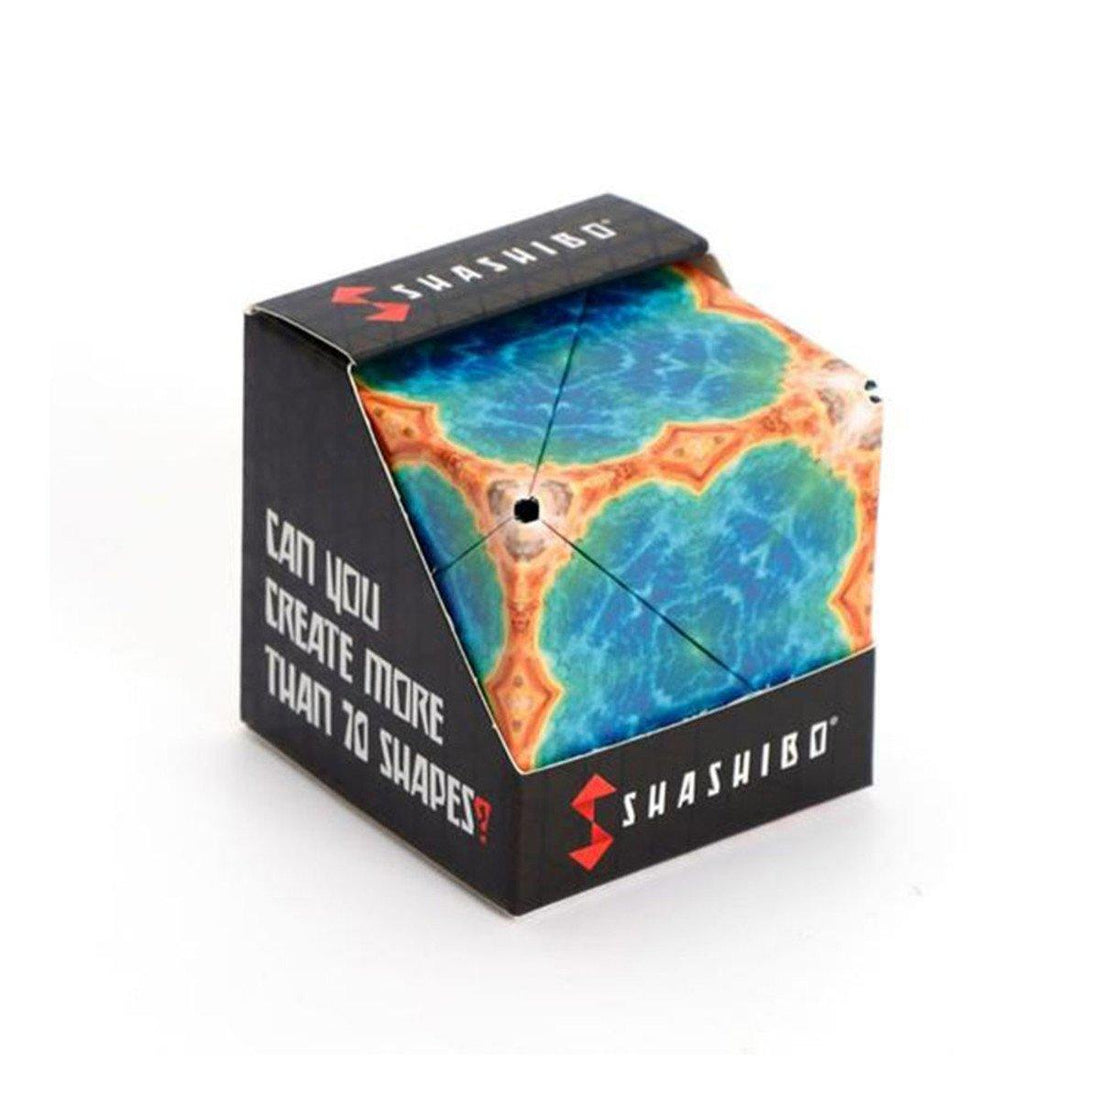 Shashibo Shape Shifting Box - Earth - Kitty Hawk Kites Online Store